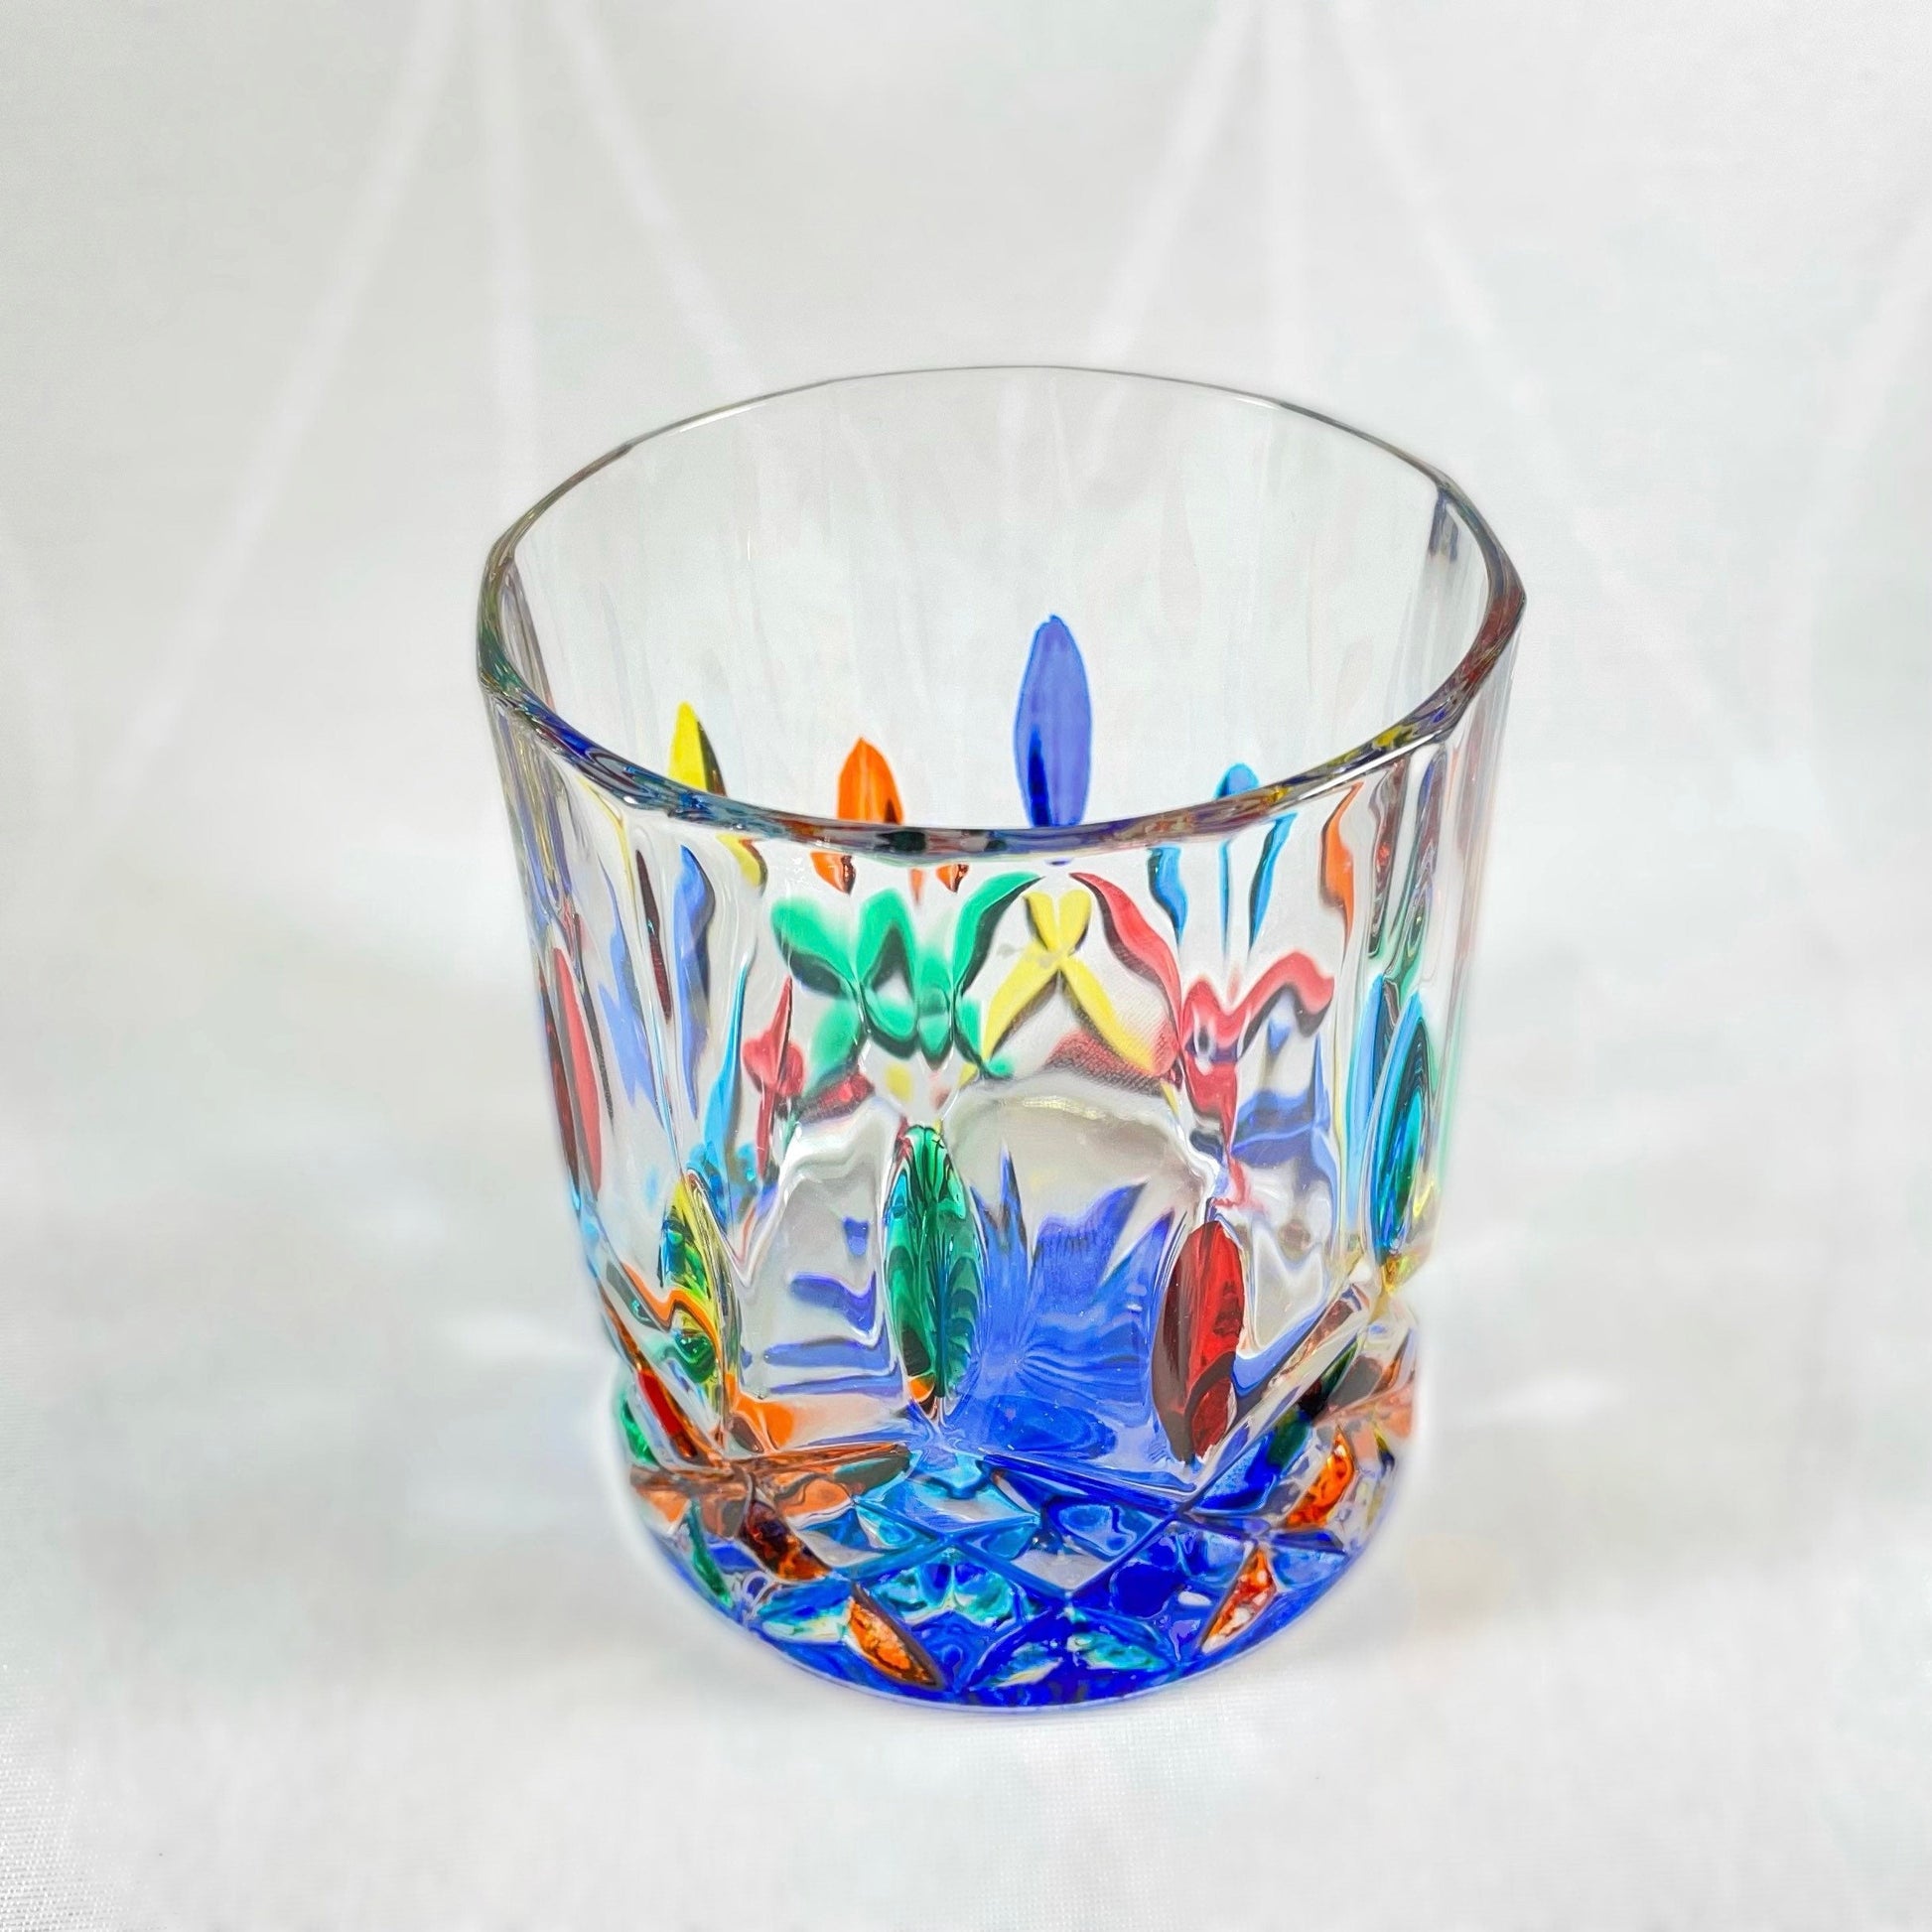 Venetian Glass Small Opera Tumbler - Handmade in Italy, Colorful Murano Glass